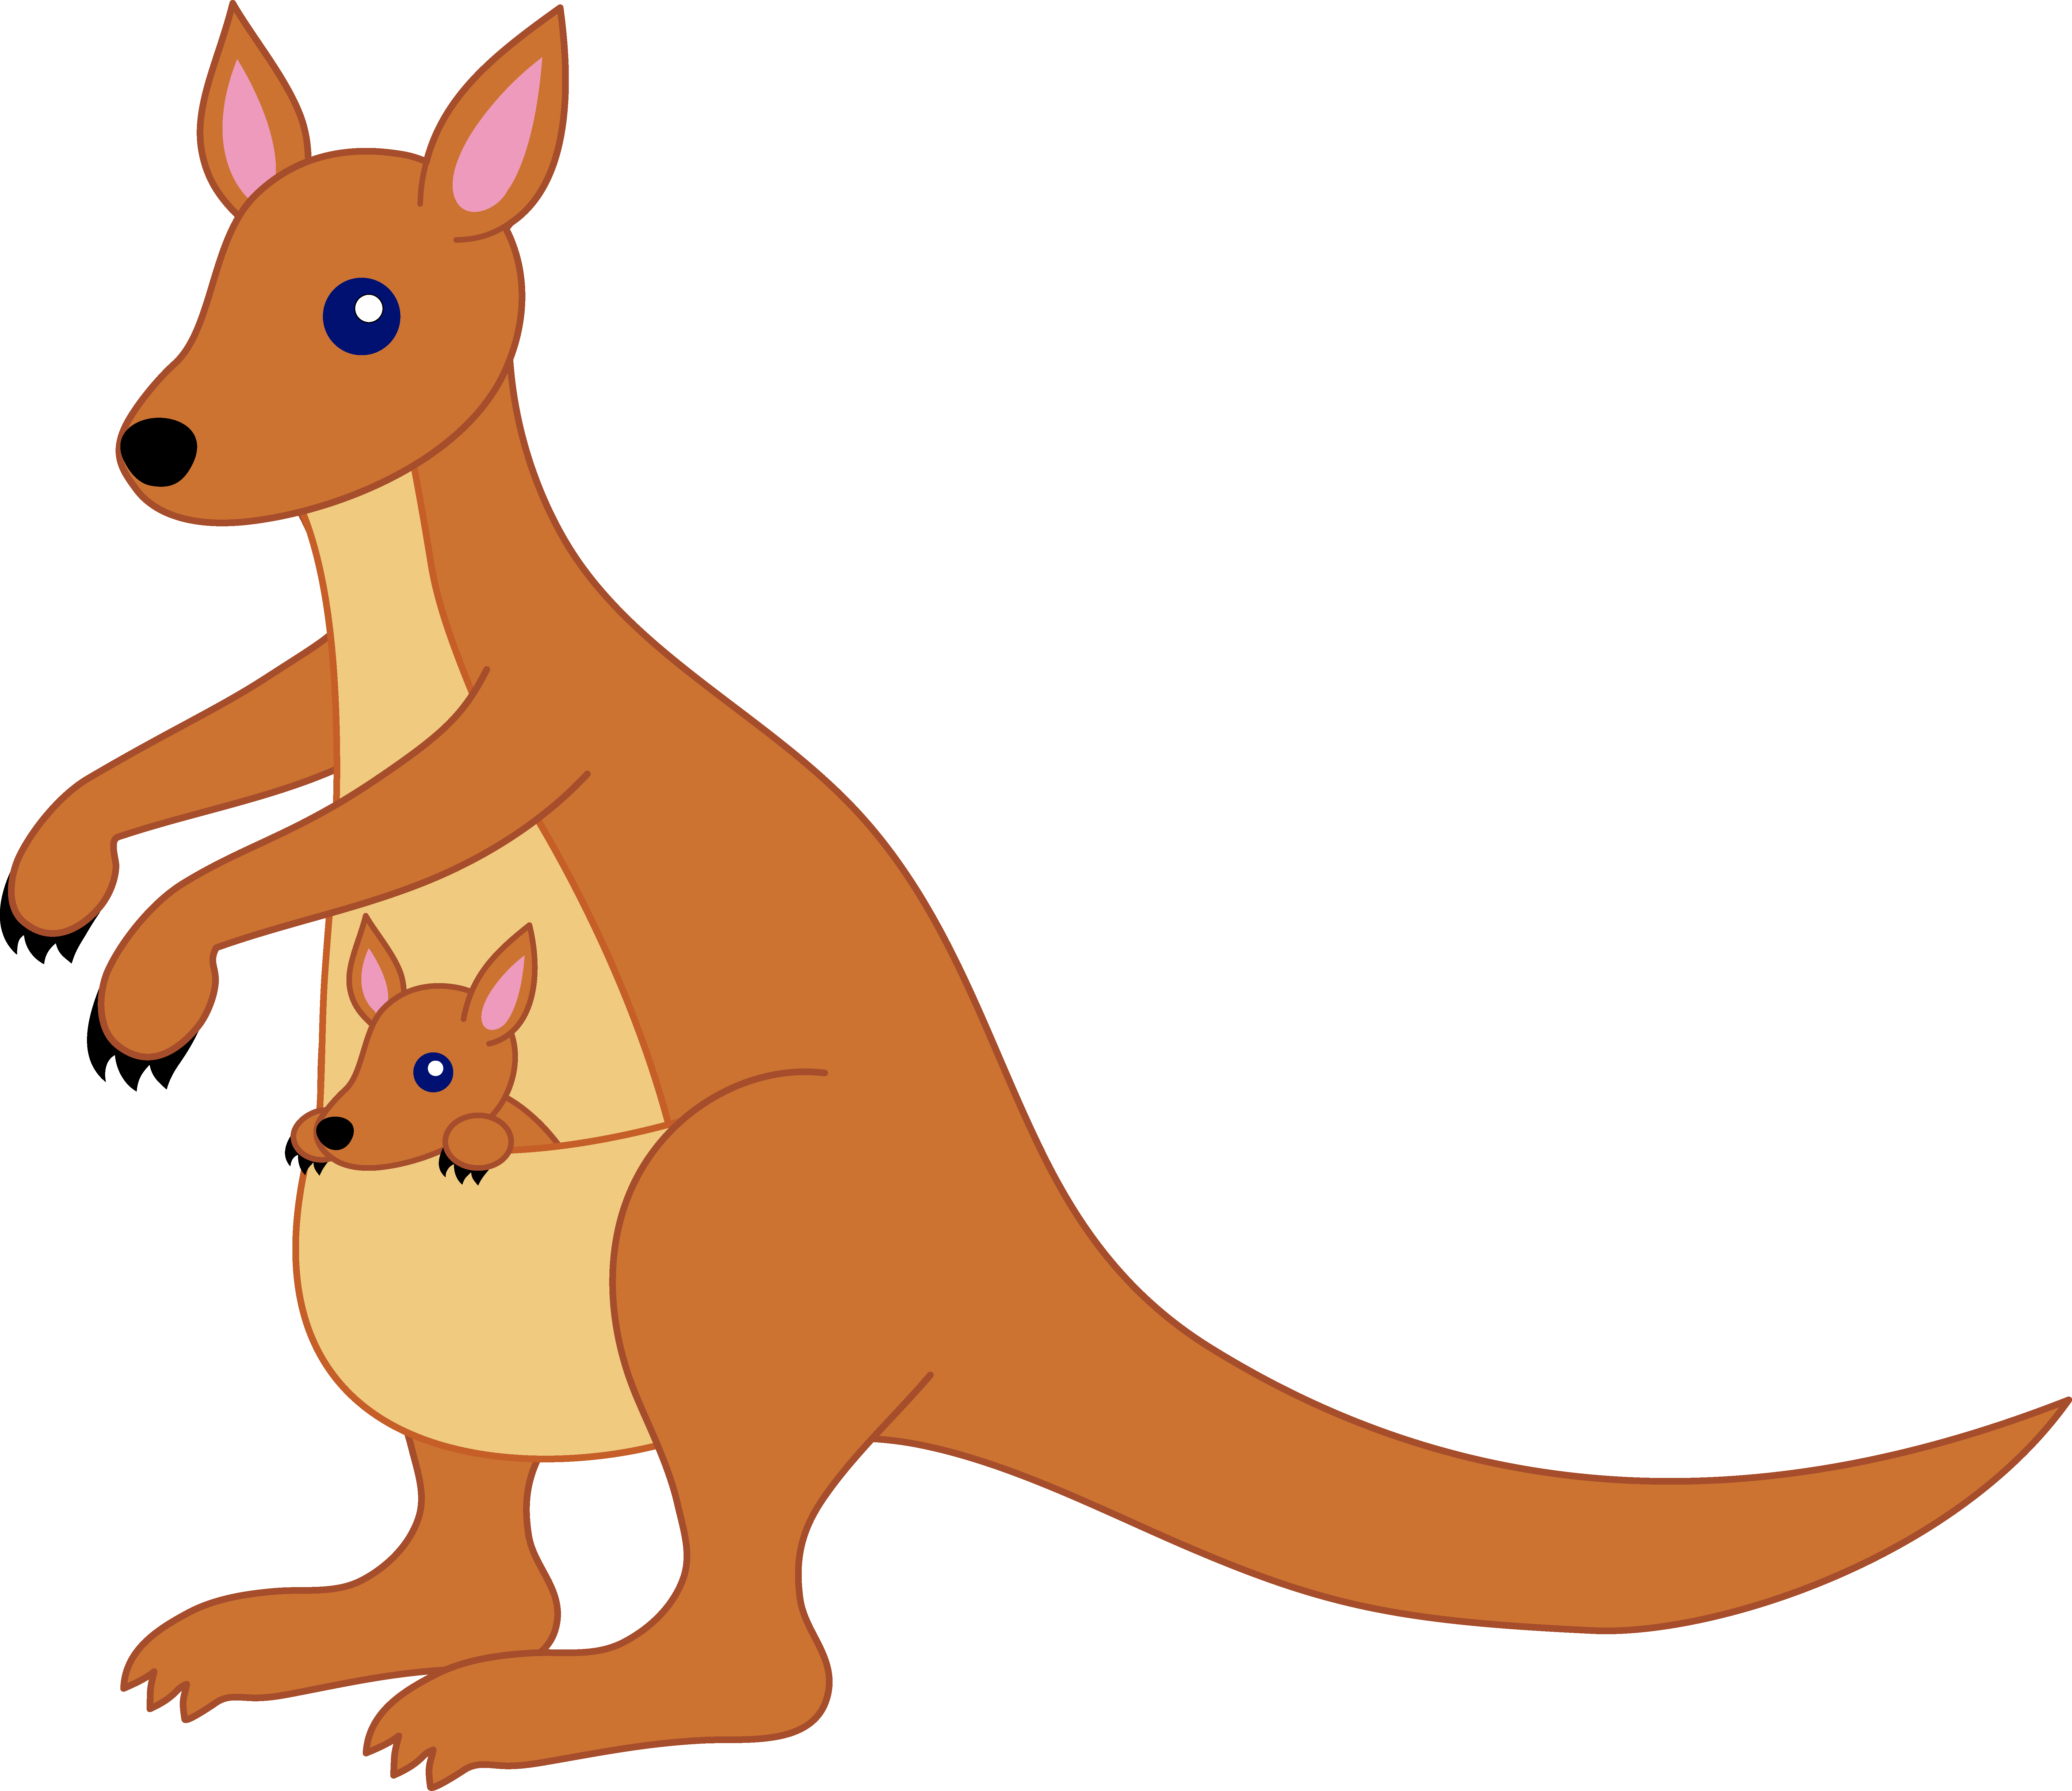 Kangaroo clipart person australia, Kangaroo person australia.